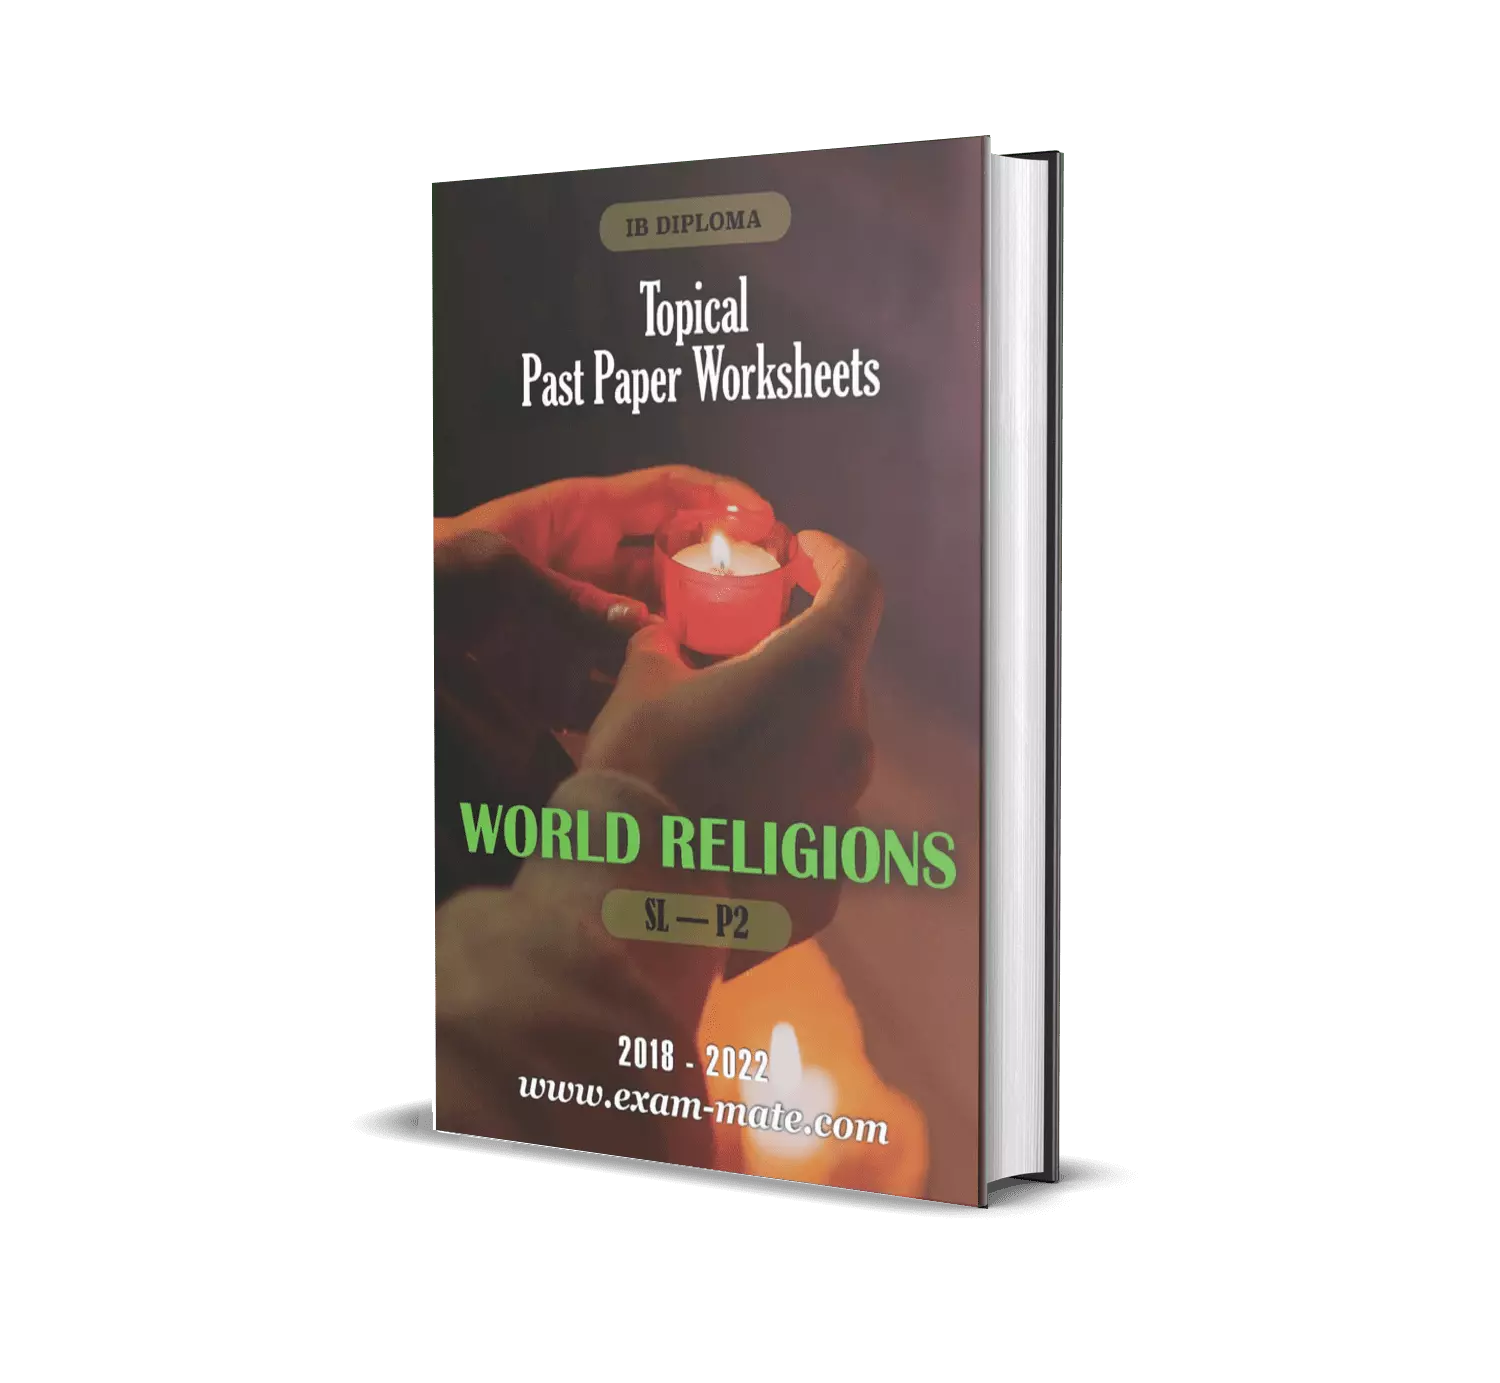 WORLD RELIGIONS SL P2